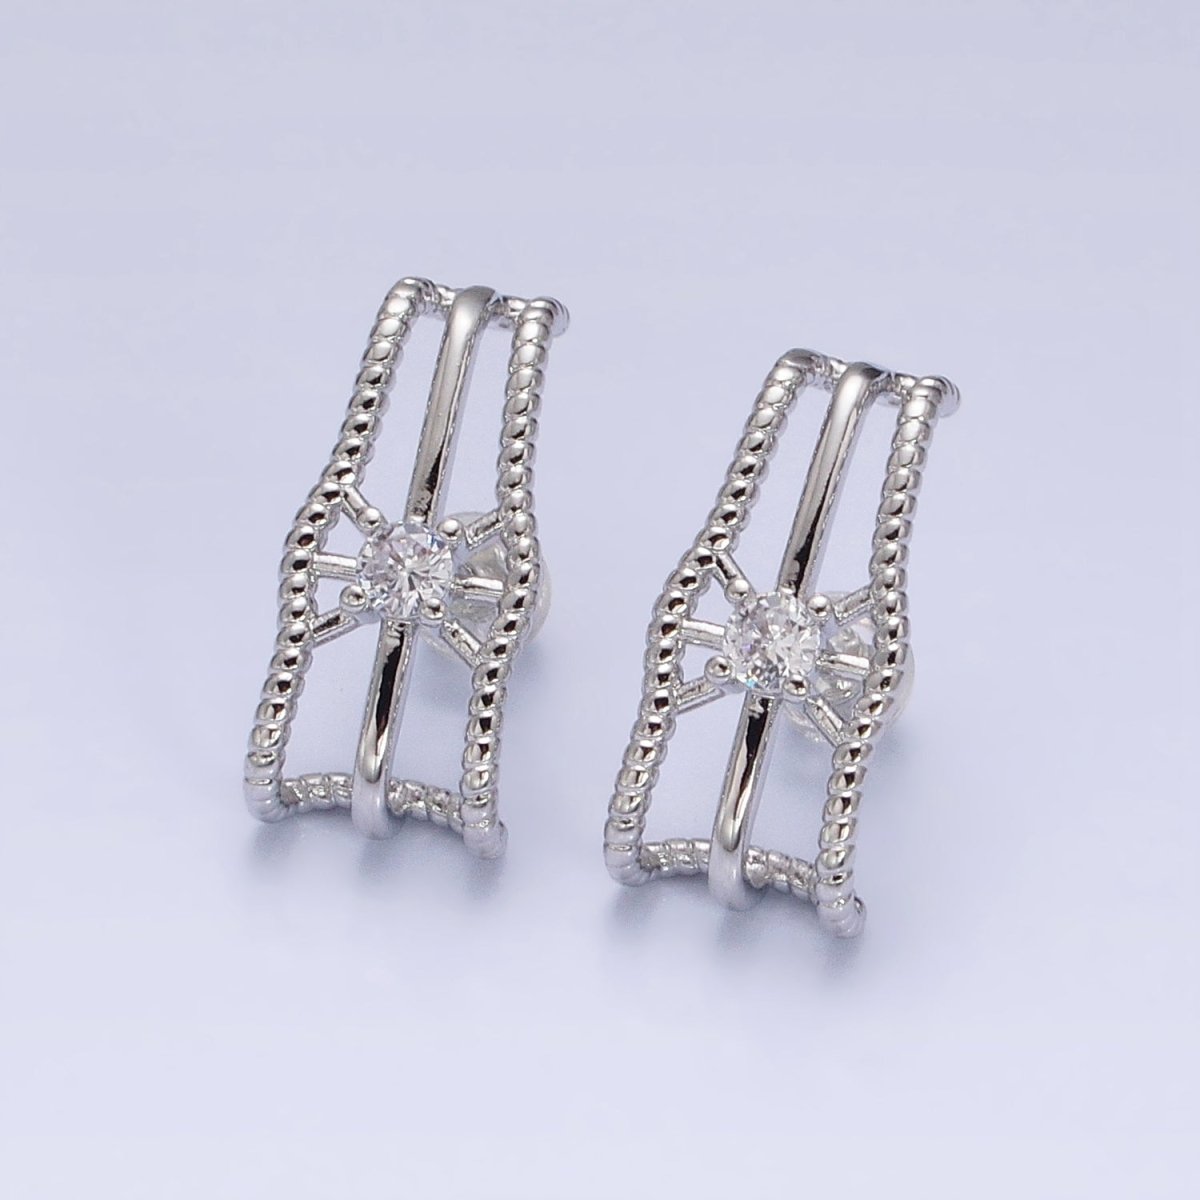 16K Gold Filled Triple Bar Twist Clear CZ 20mm Stud Earrings Set in Gold & Silver | AD1304 AD1305 - DLUXCA